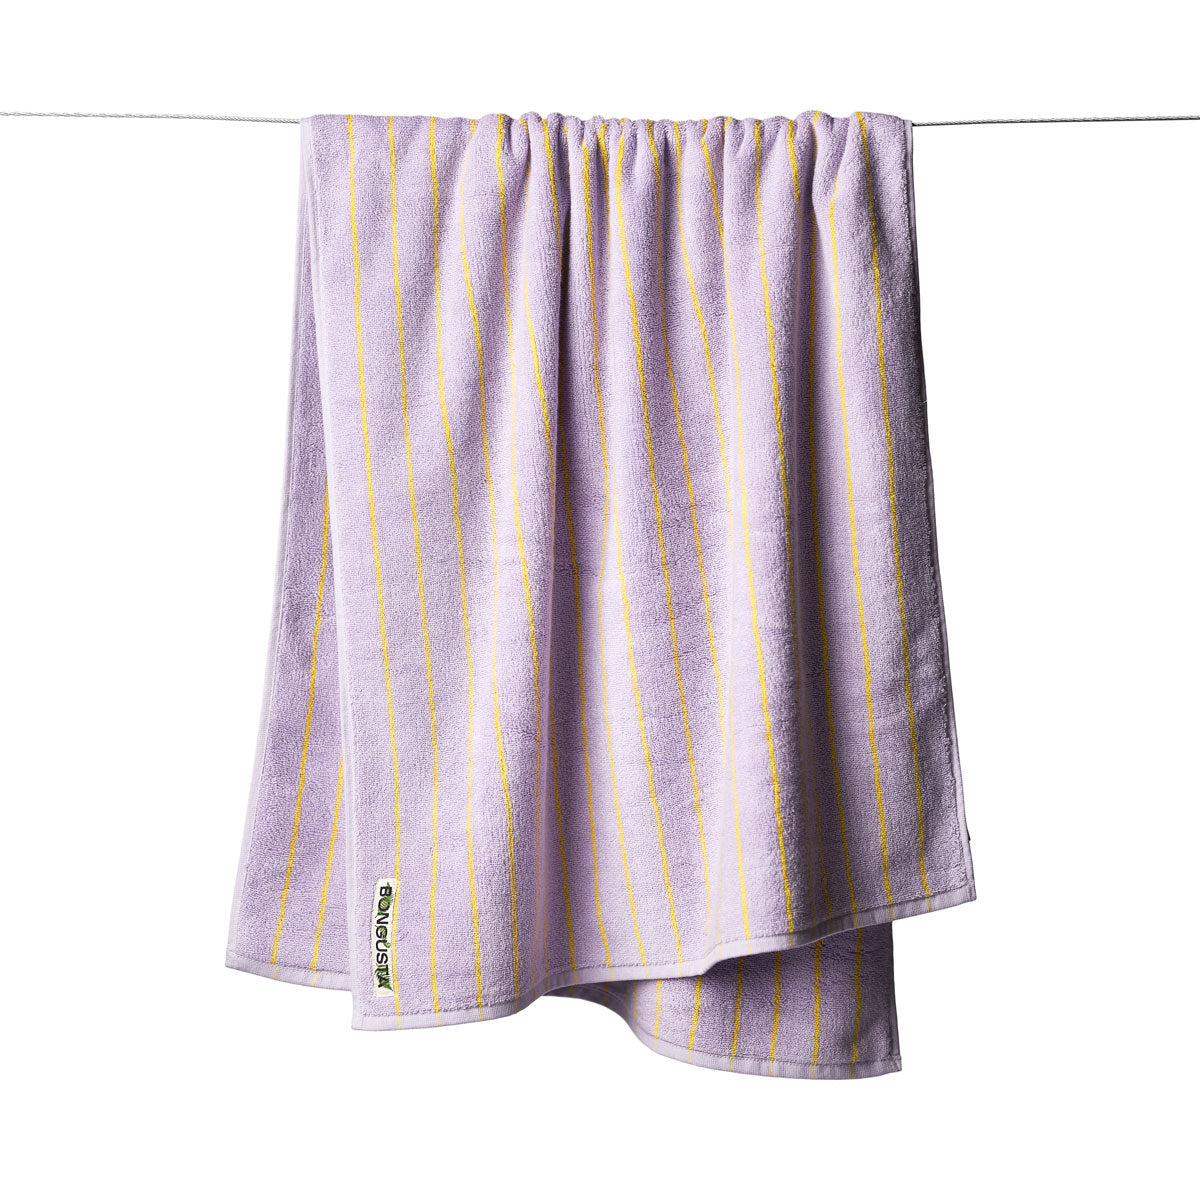 Bongusta Naram Towels - Lilac and Neon Yellow